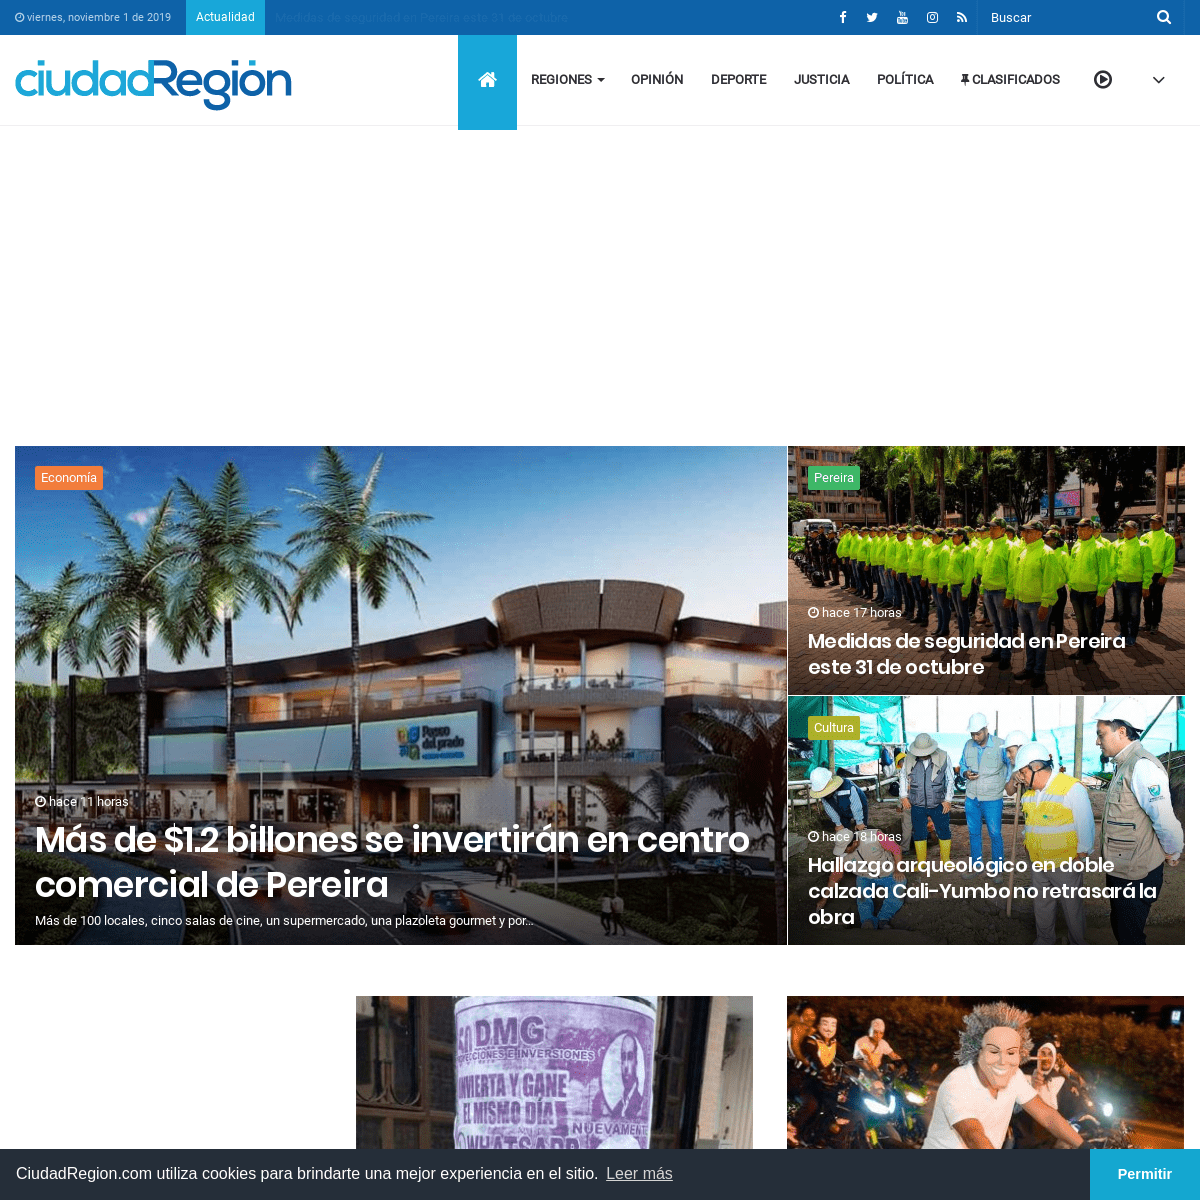 A complete backup of ciudadregion.com